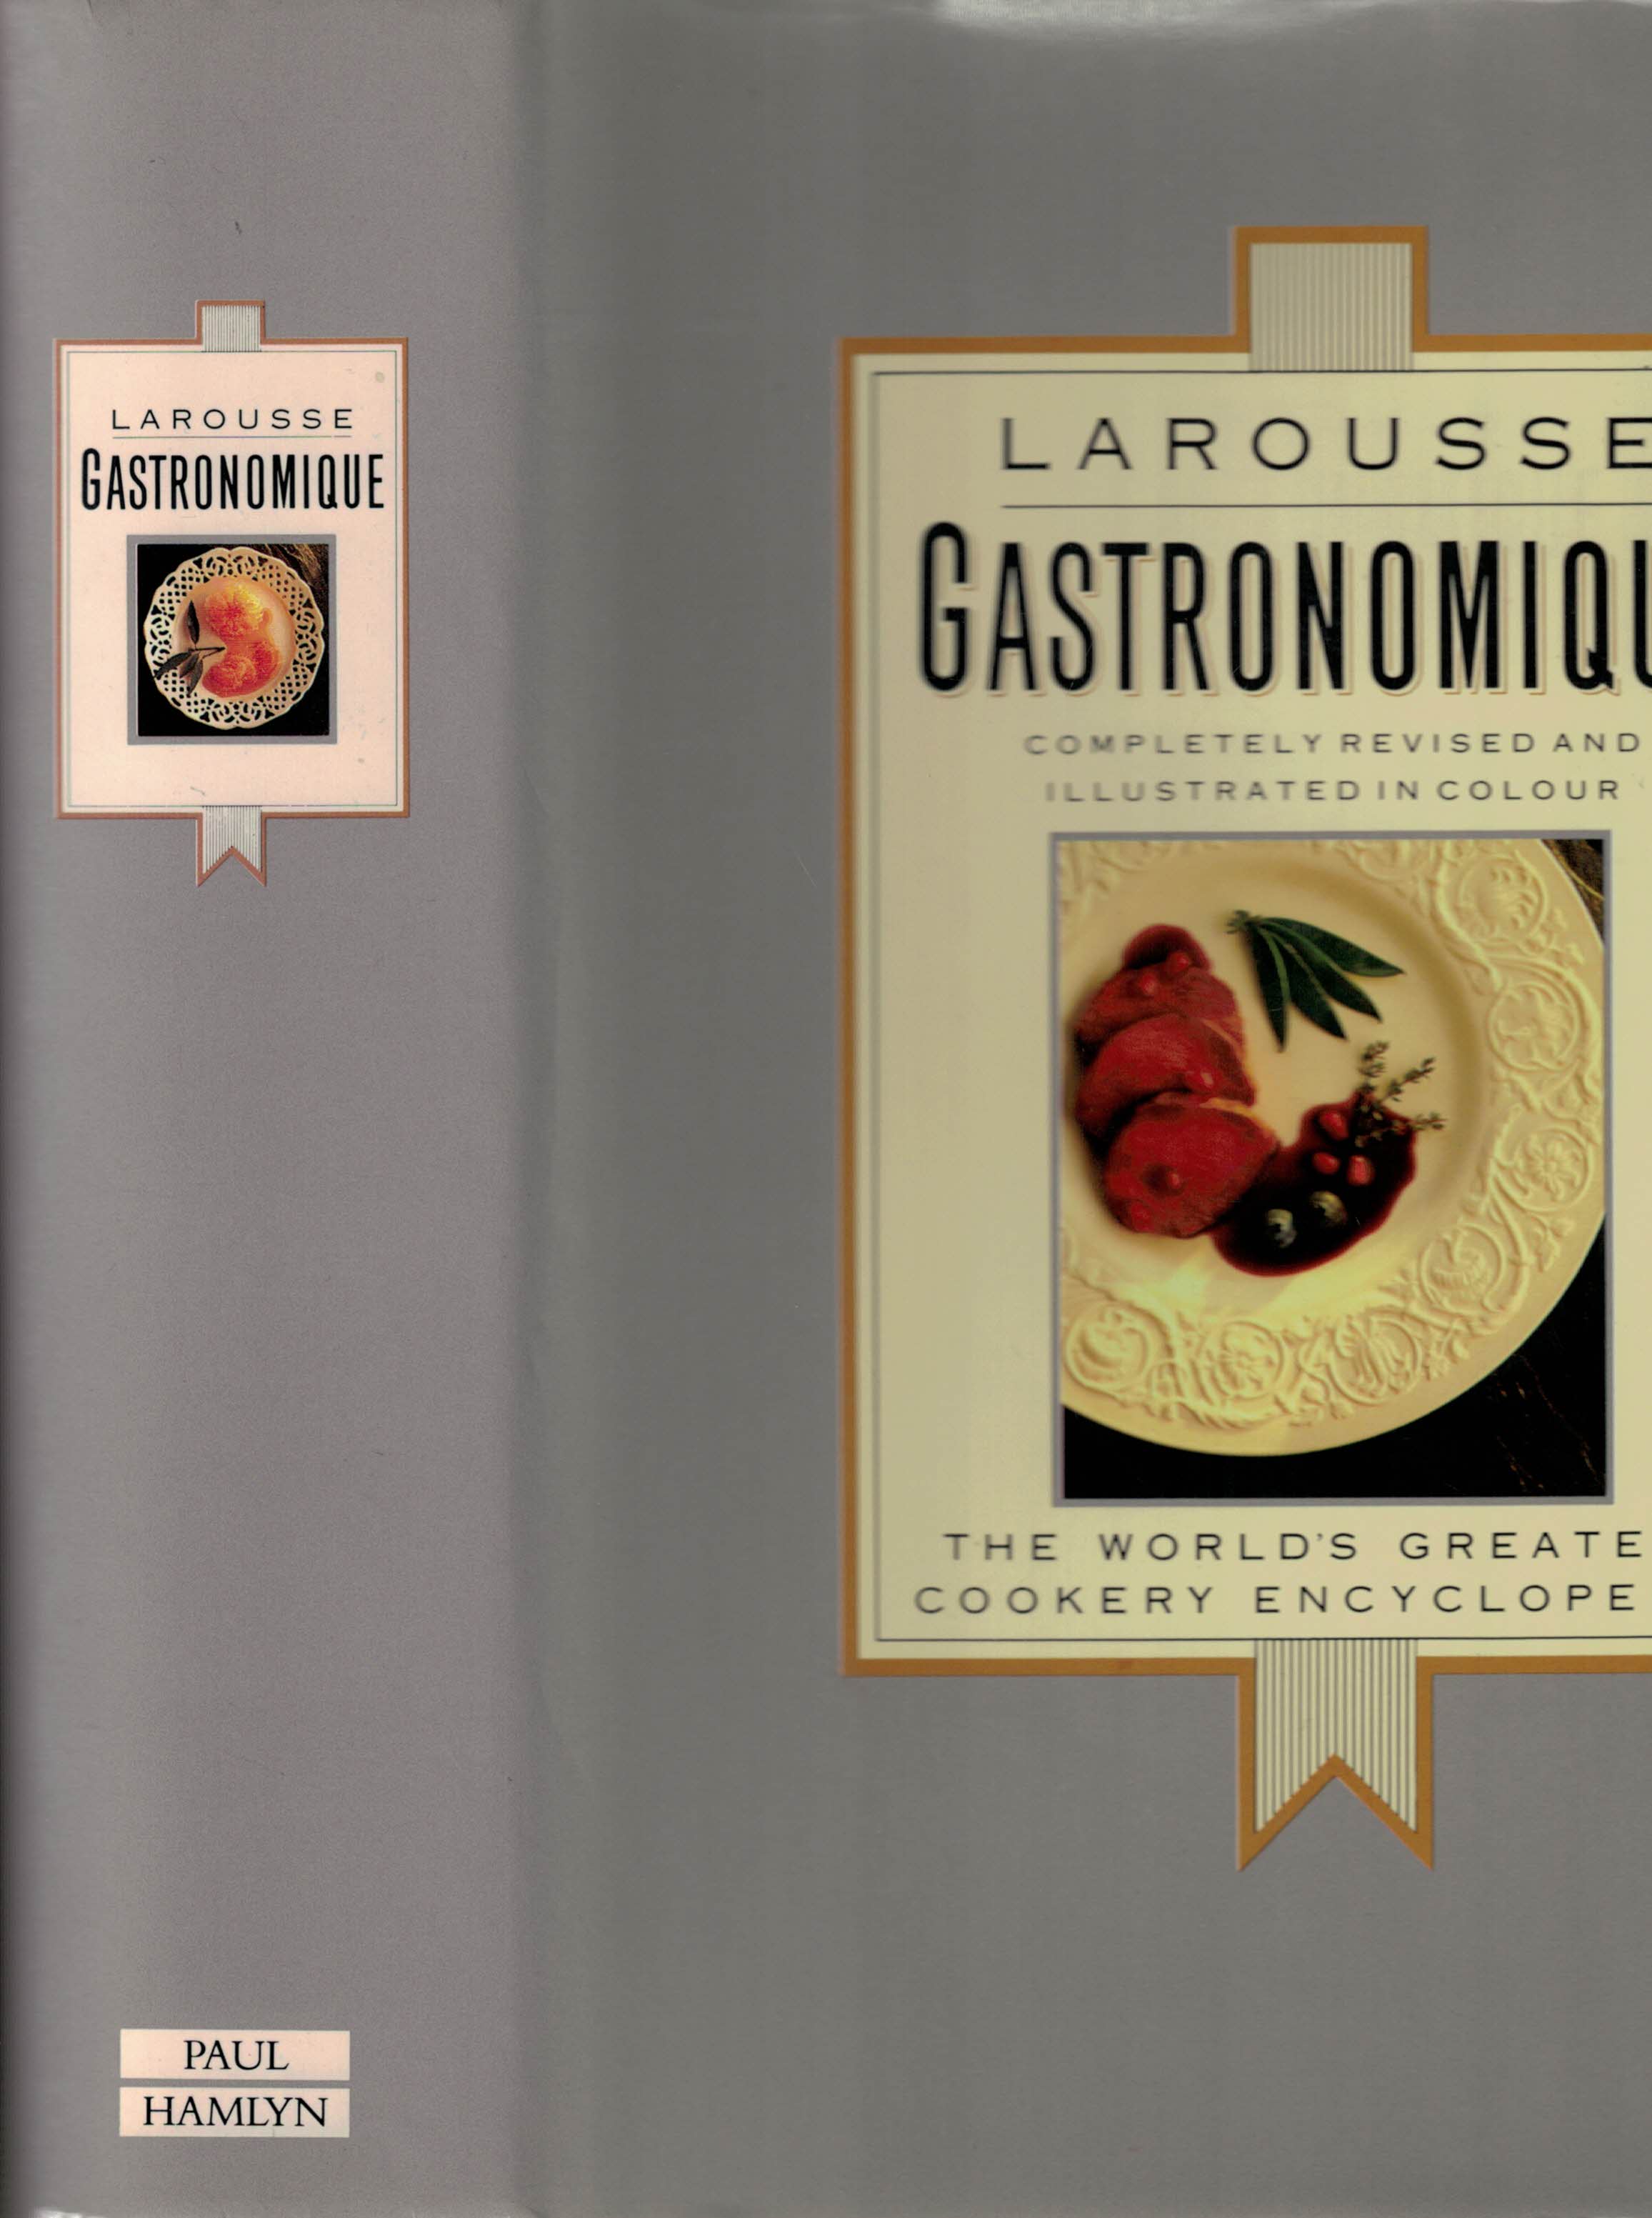 Larousse Gastronomique. The World's Greatest Cookery Encyclopedia. 1988.